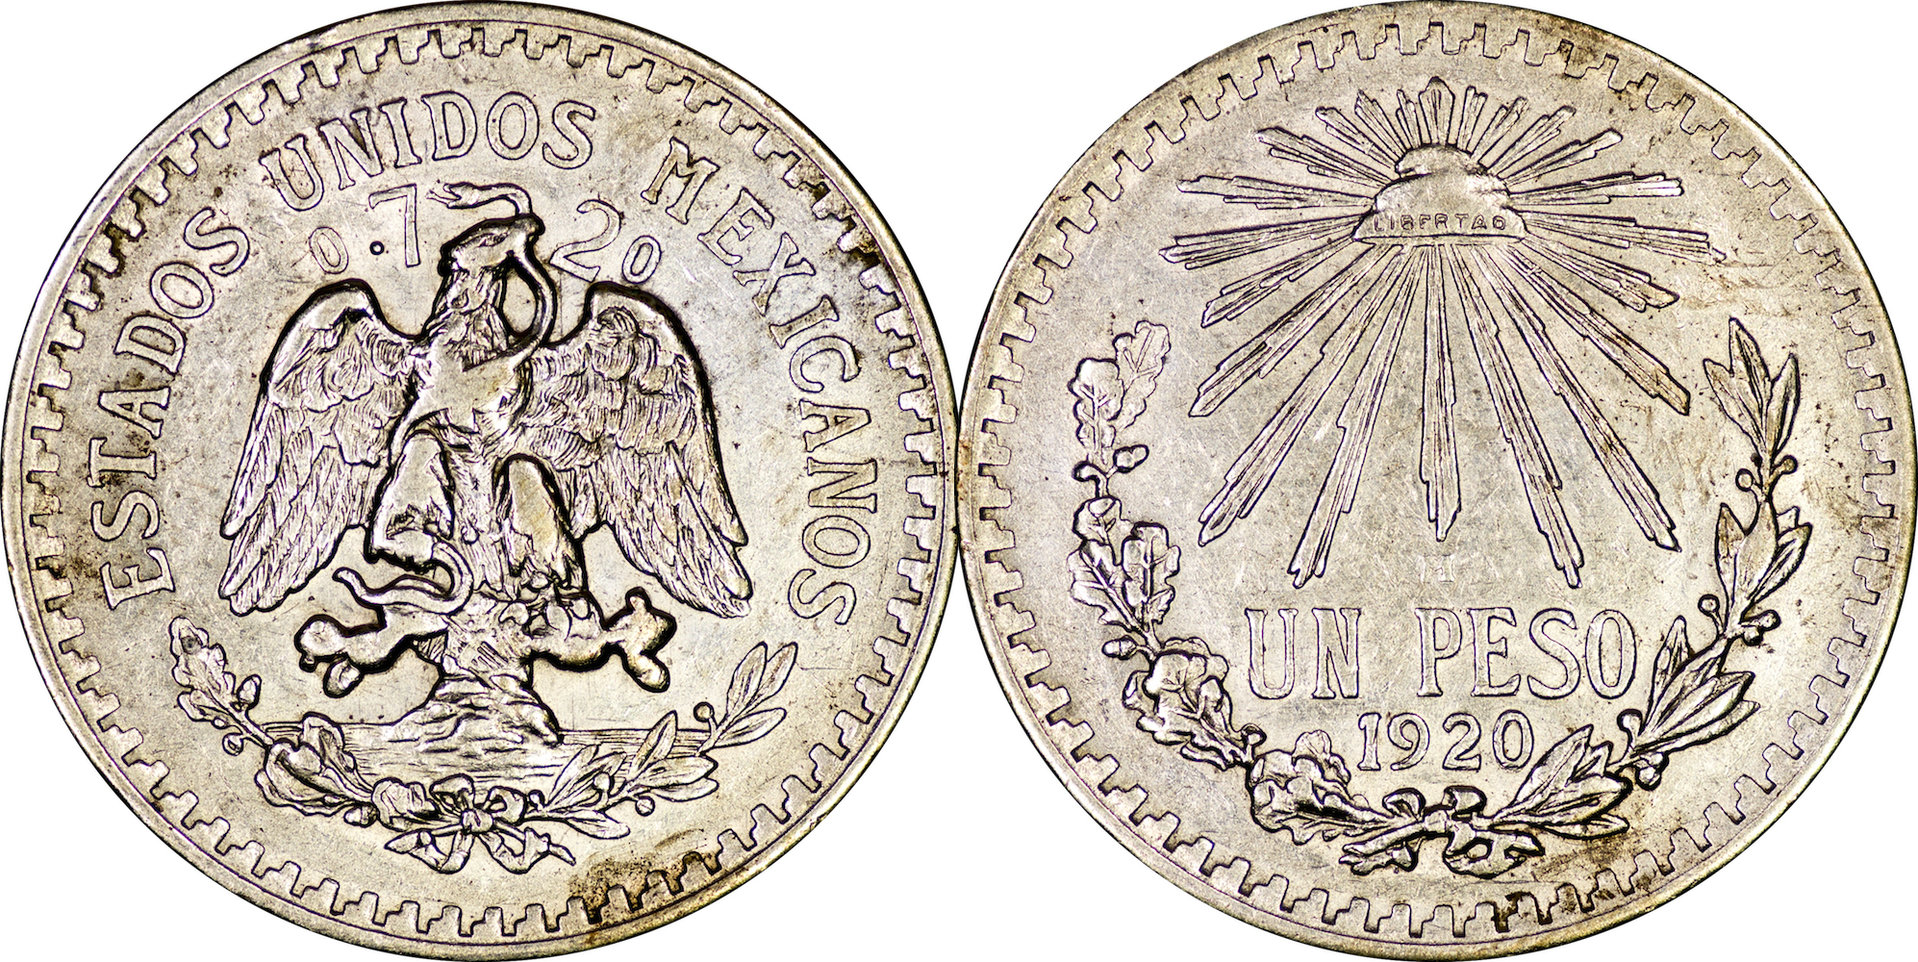 Mexico - 1920 1 Peso.jpg